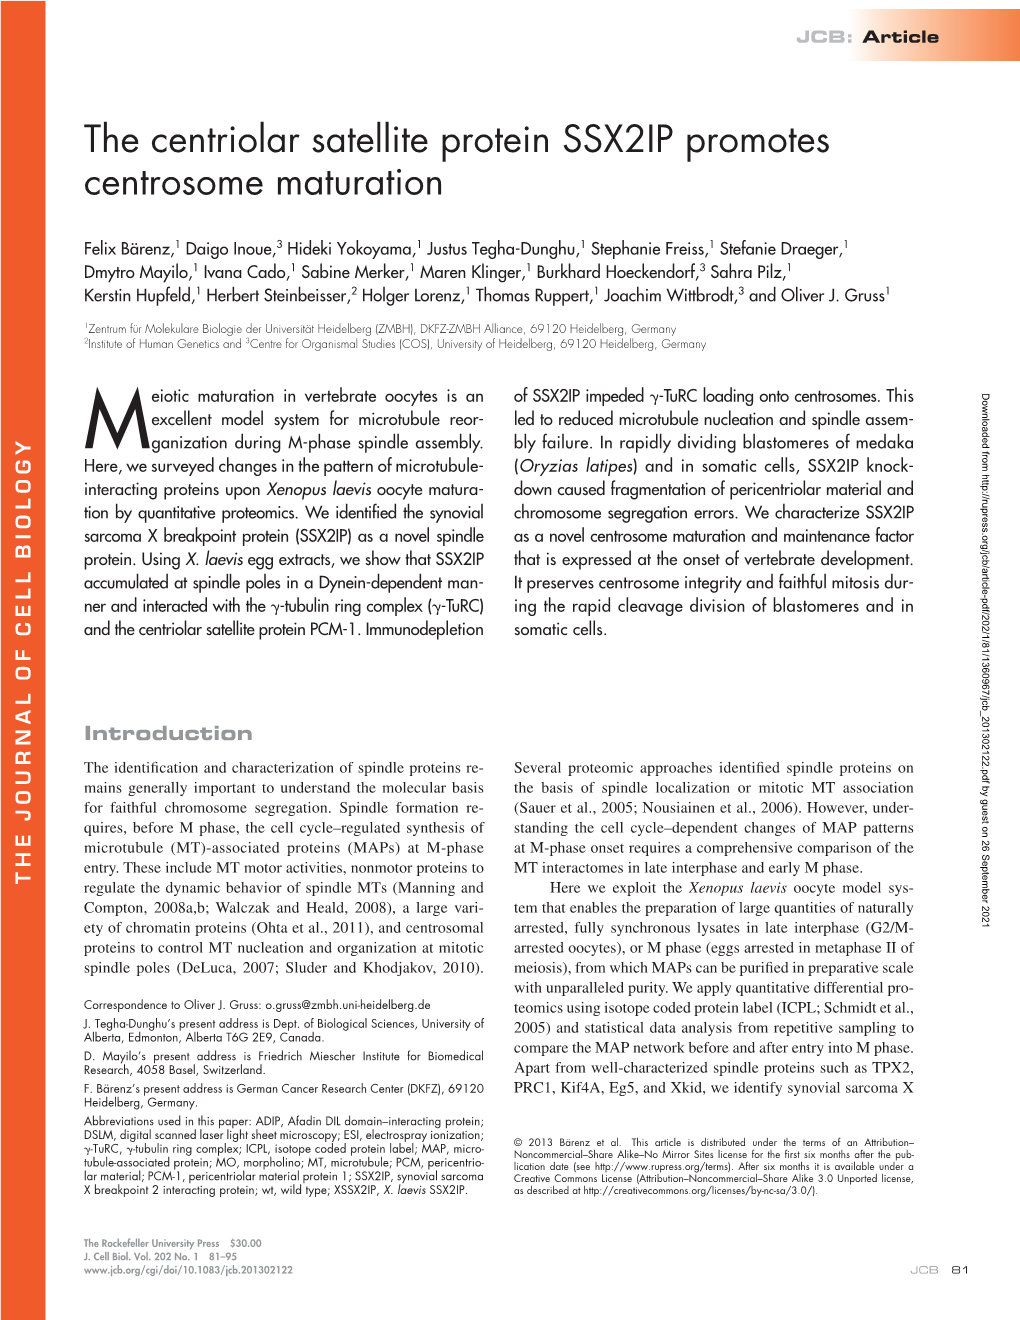 The Centriolar Satellite Protein SSX2IP Promotes Centrosome Maturation